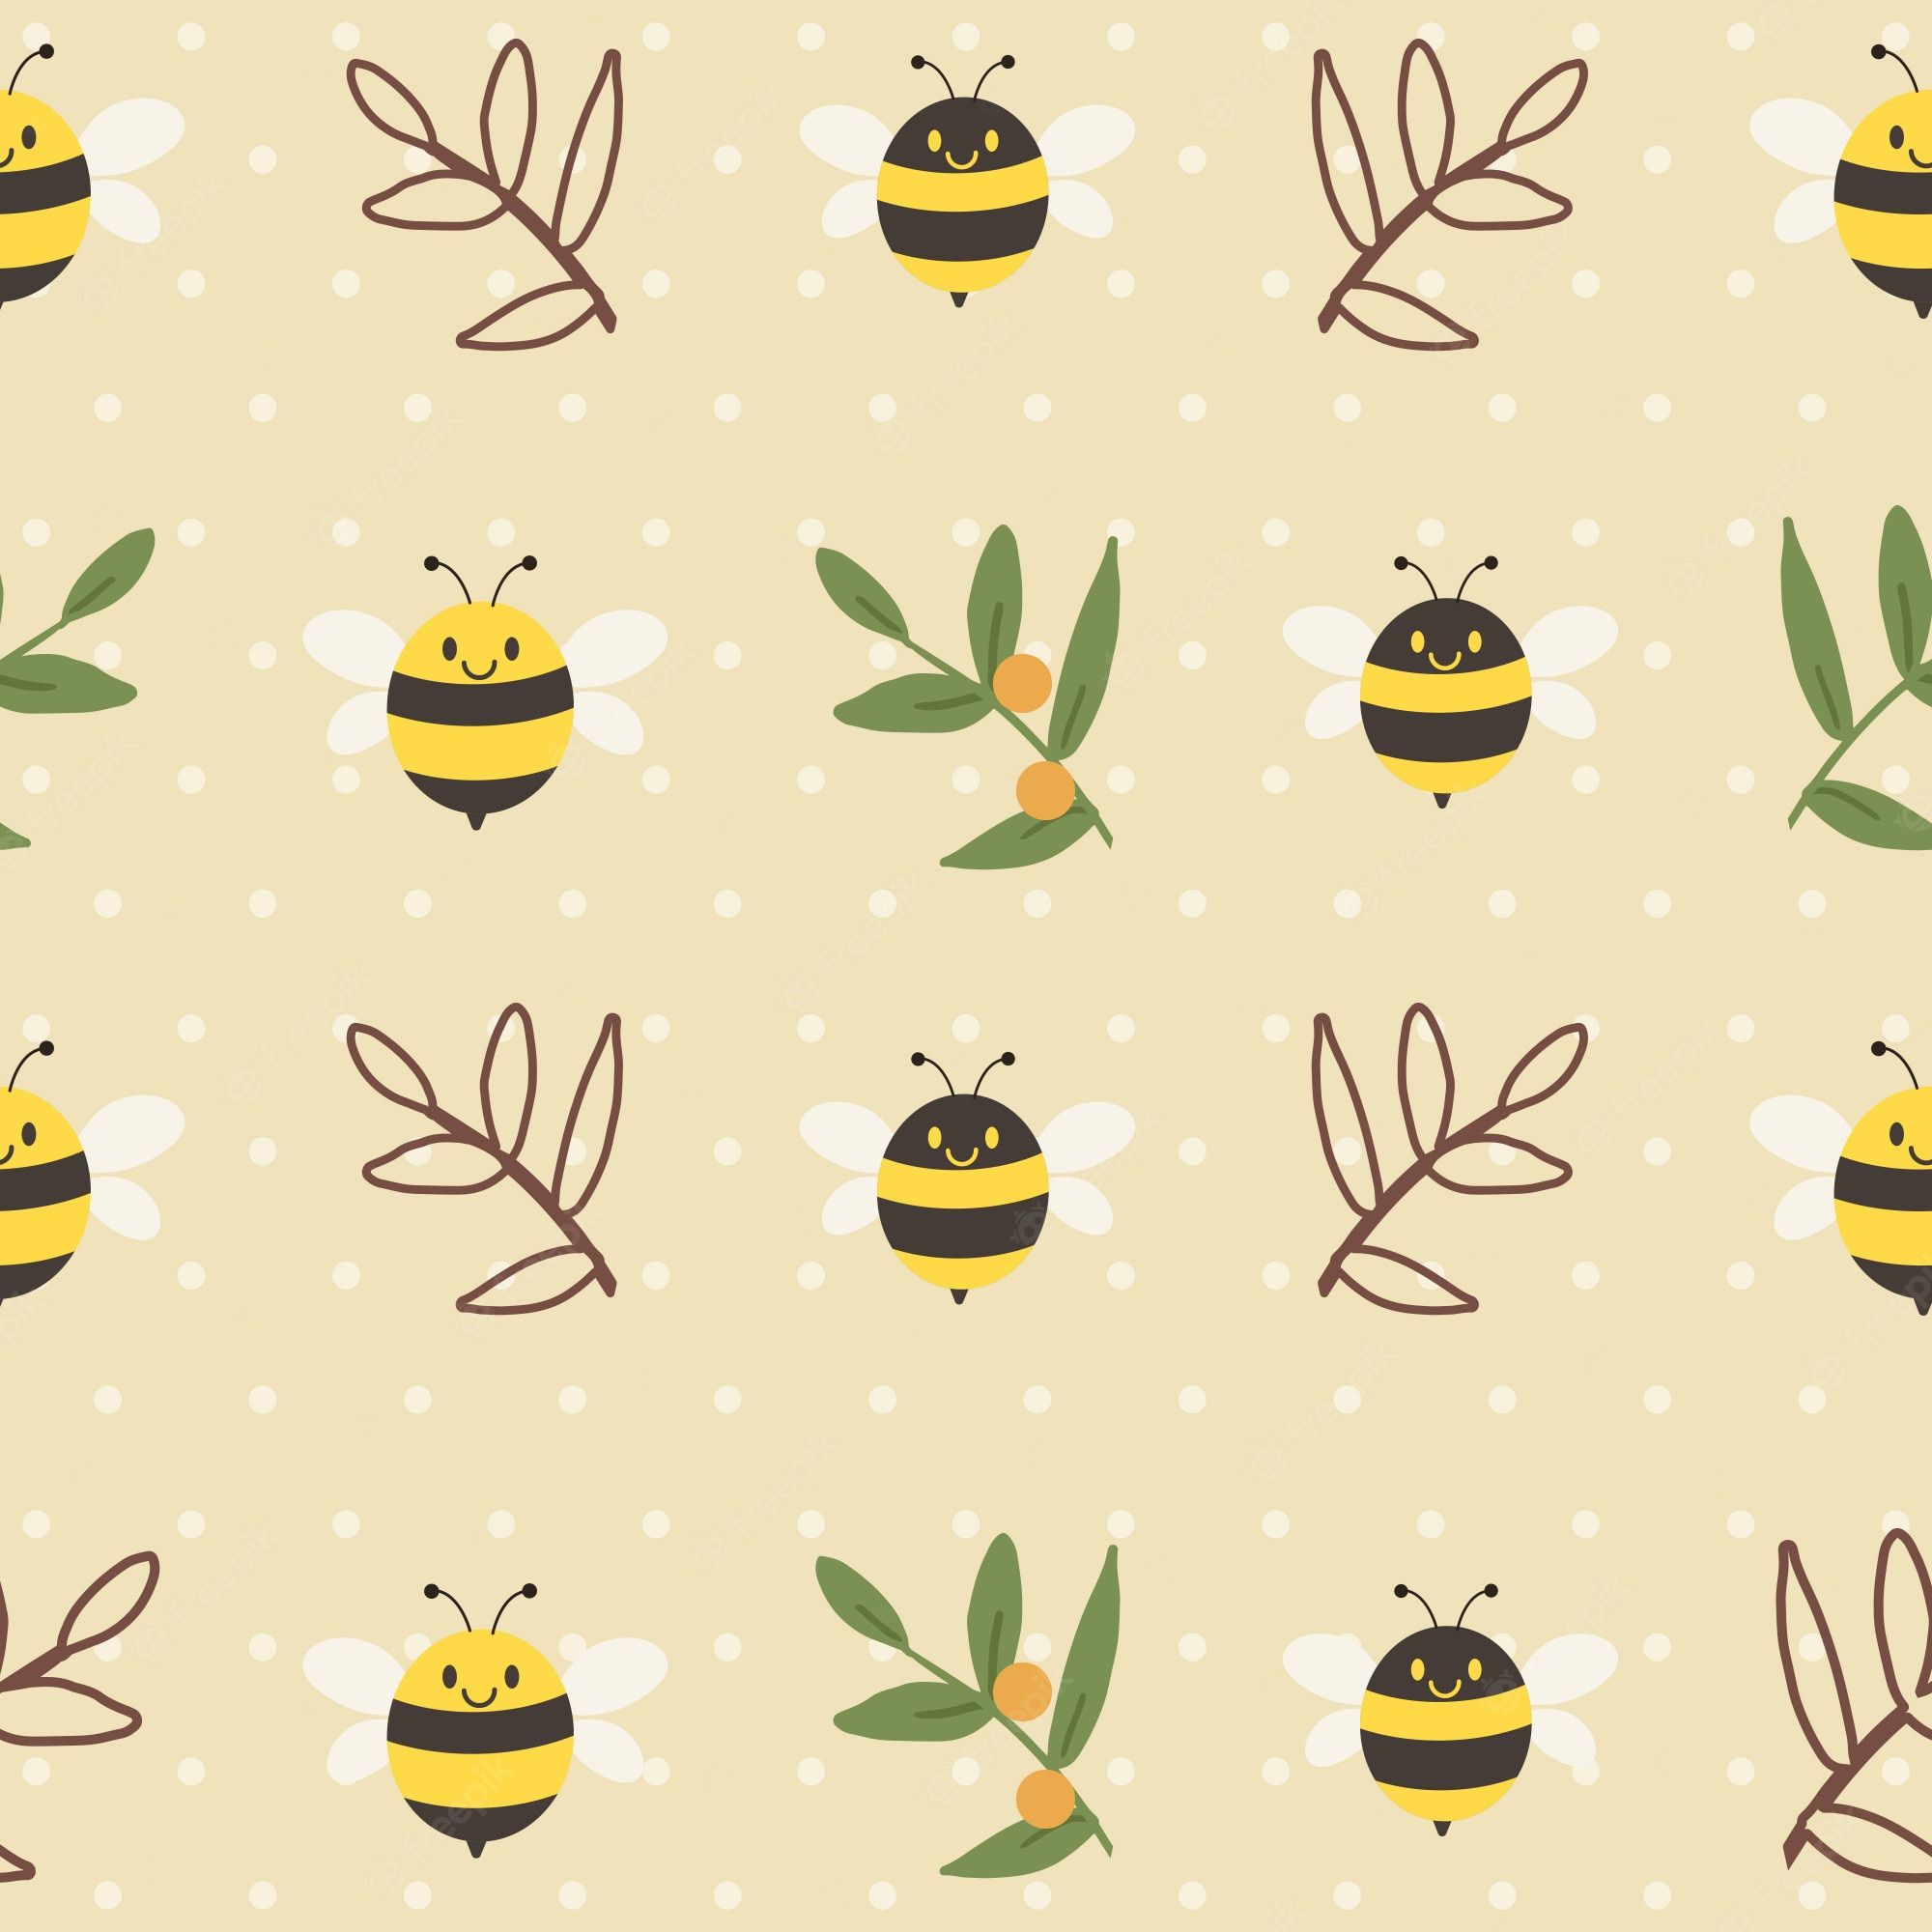 Bee wallpaper Vectors & Illustrations for Free Download